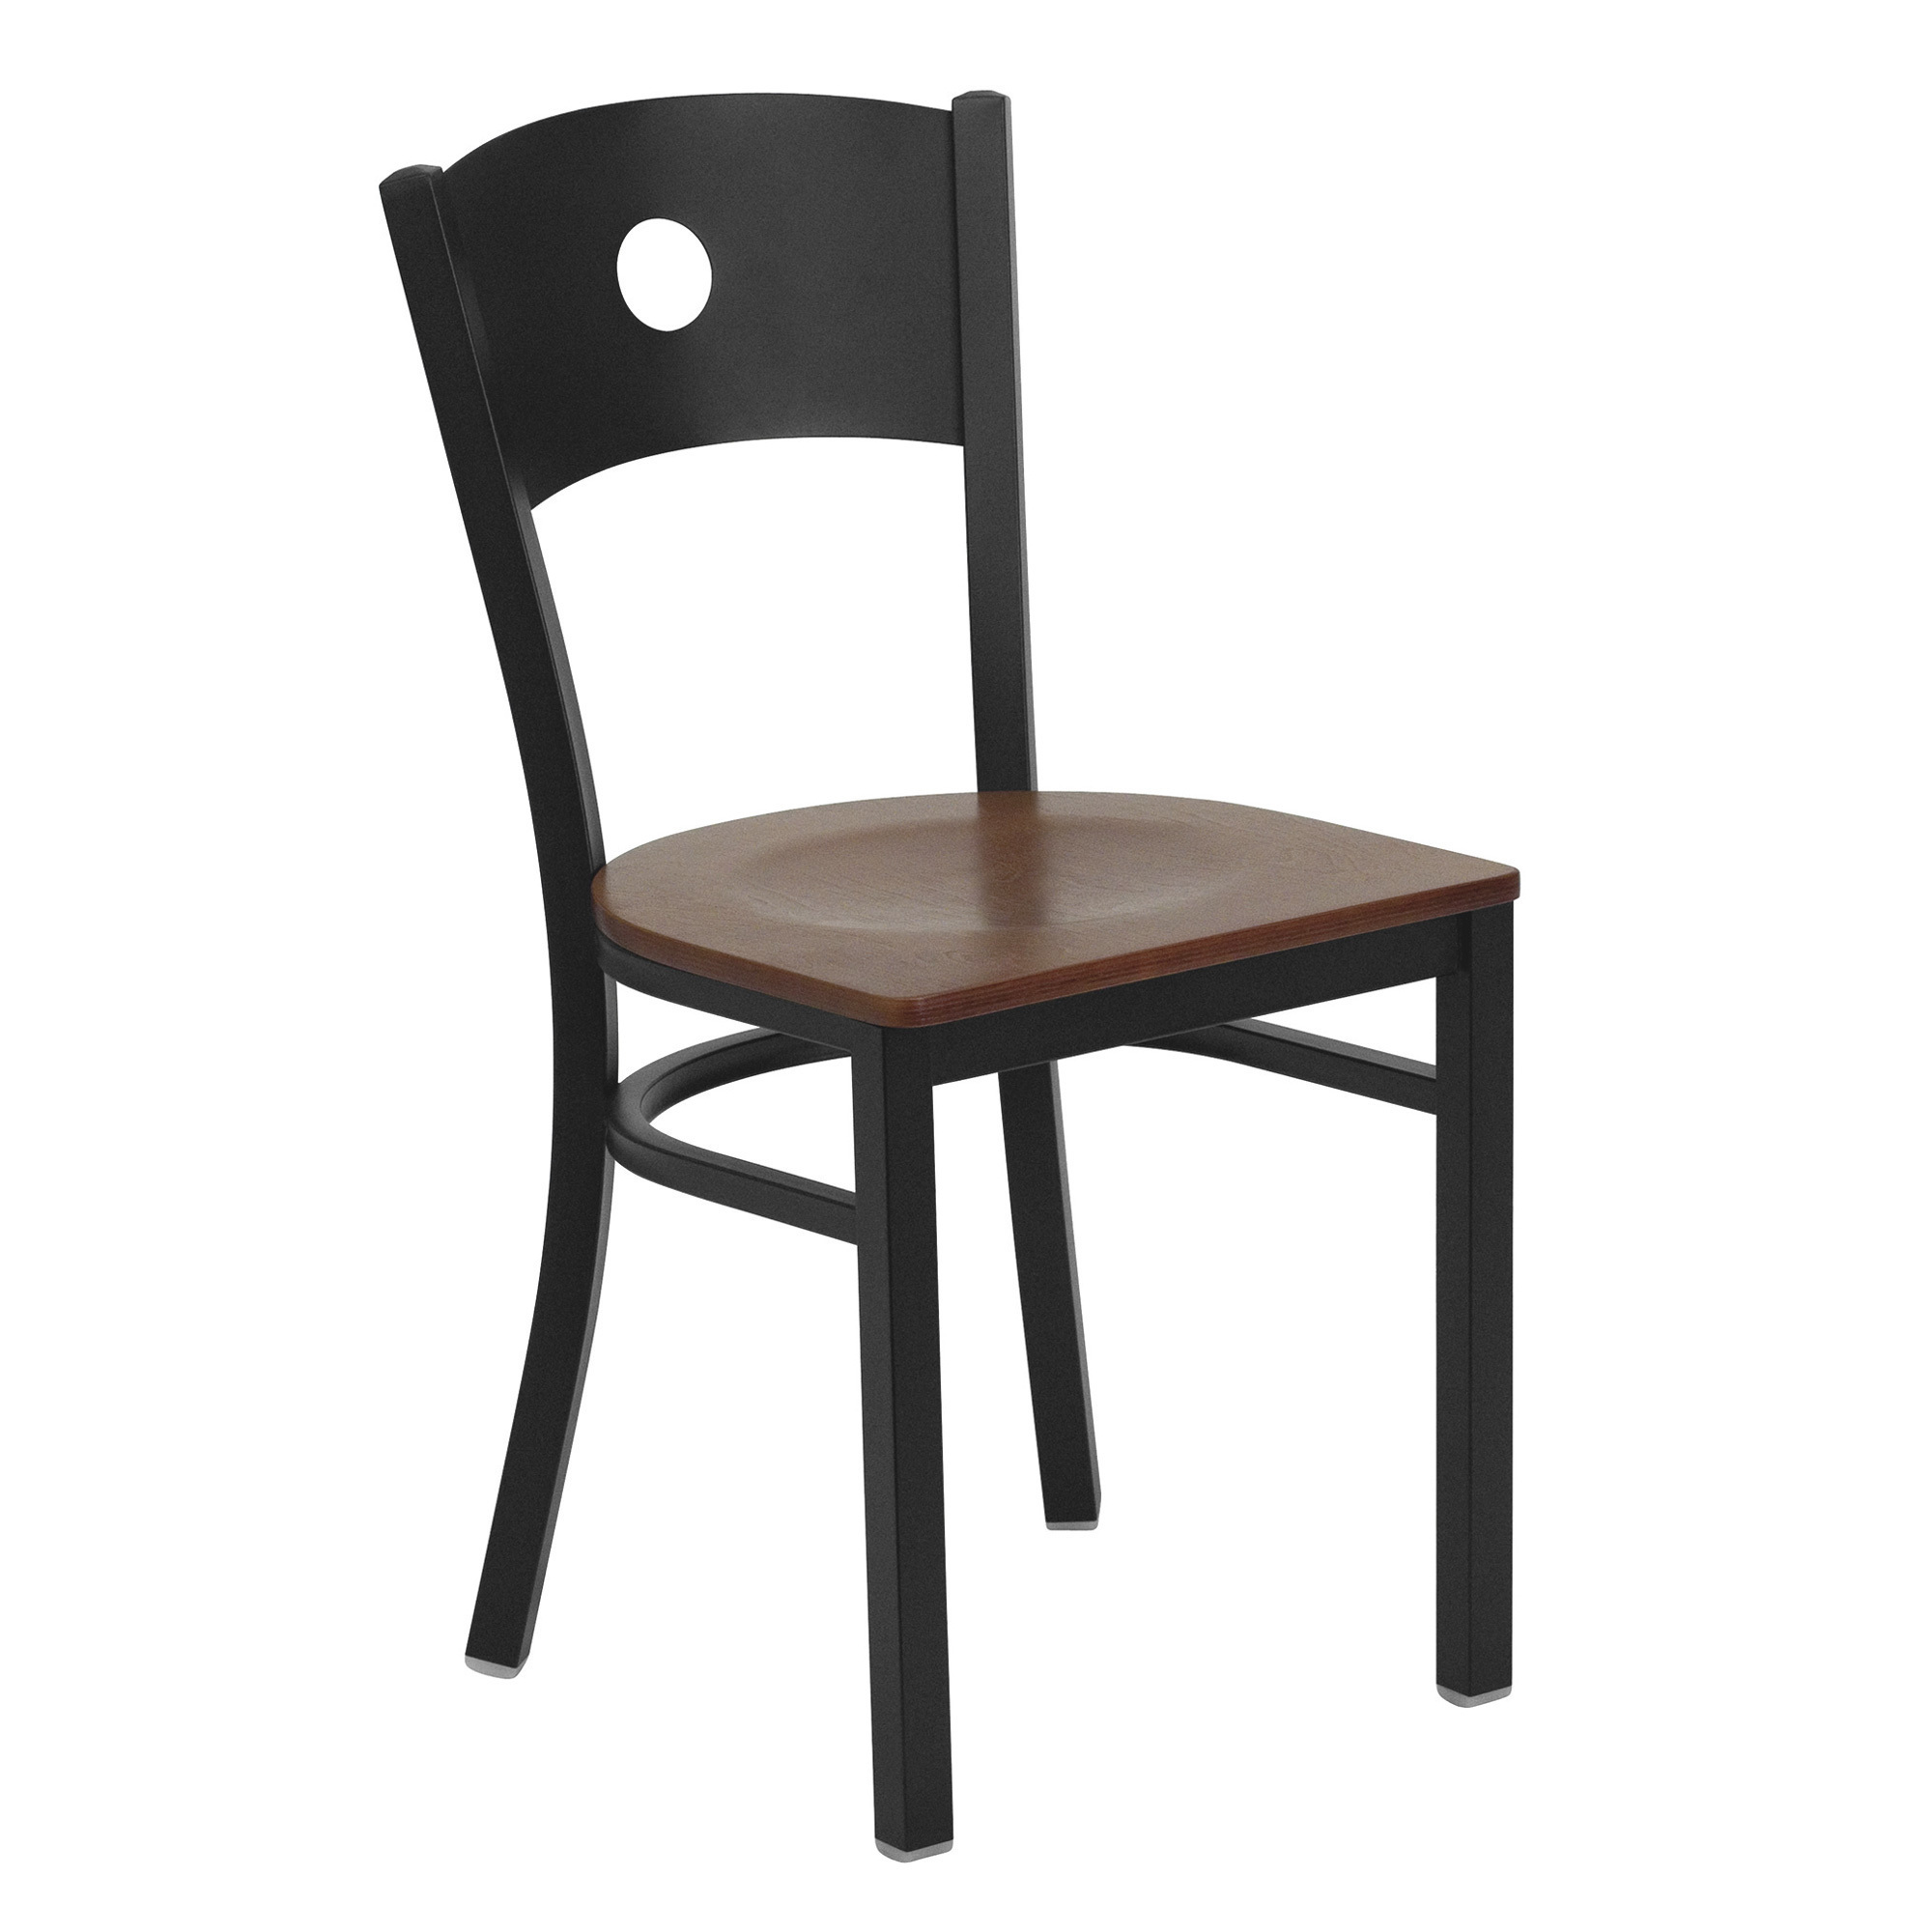 Flash Furniture Metal Chair with Circle Cutout Back â Cherry Wood Seat/Black Frame, 500-Lb. Capacity, Model XUDG6019CIRCHYW